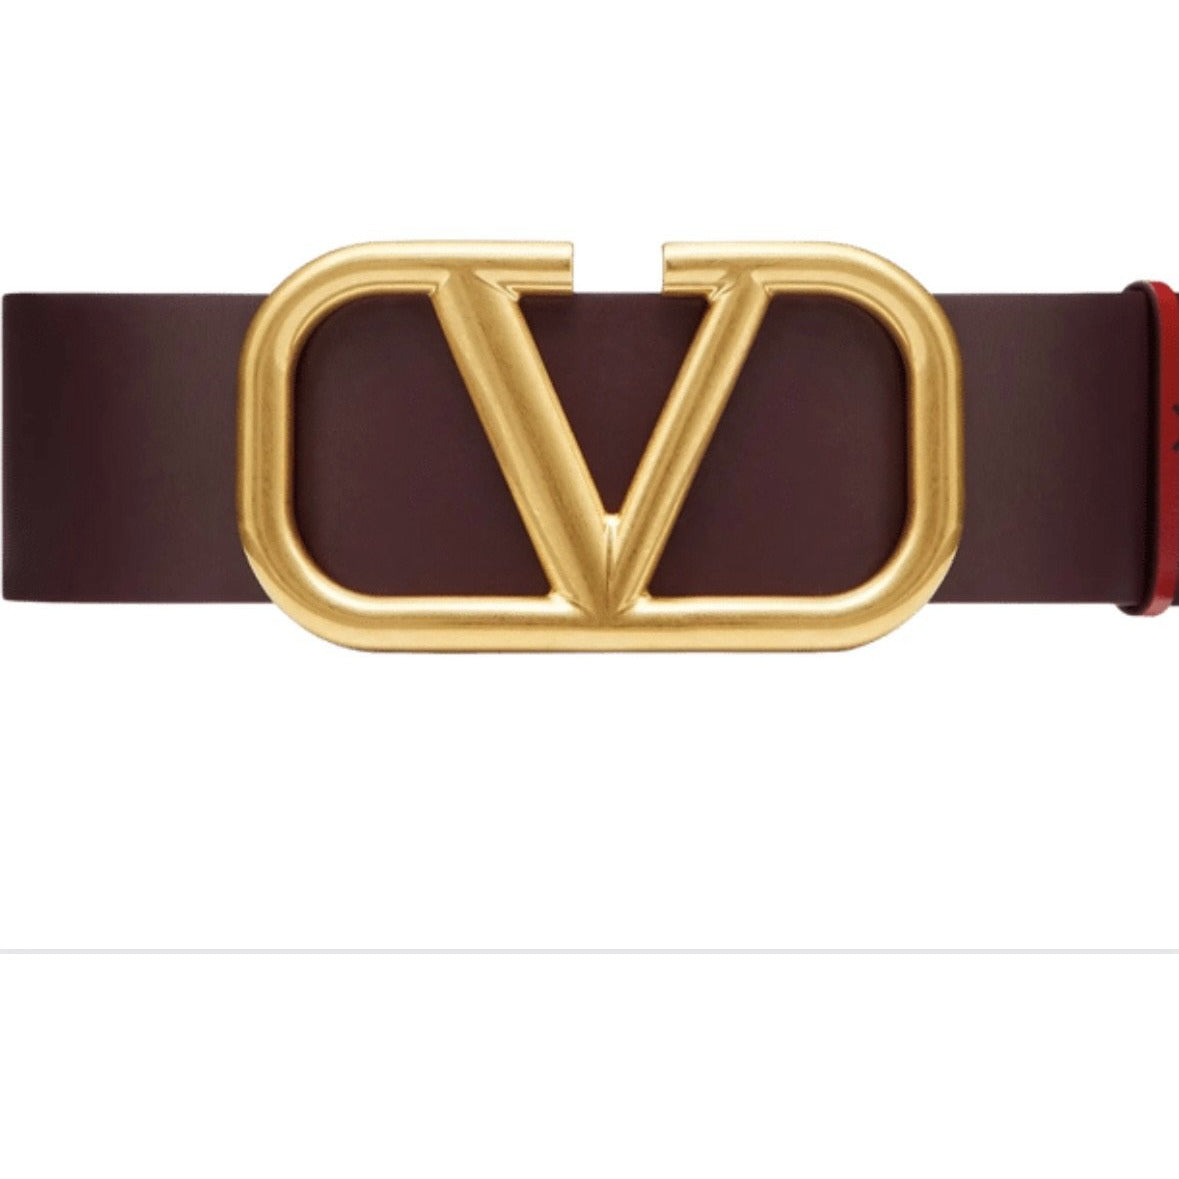 Valentino Garavani Signature Belt